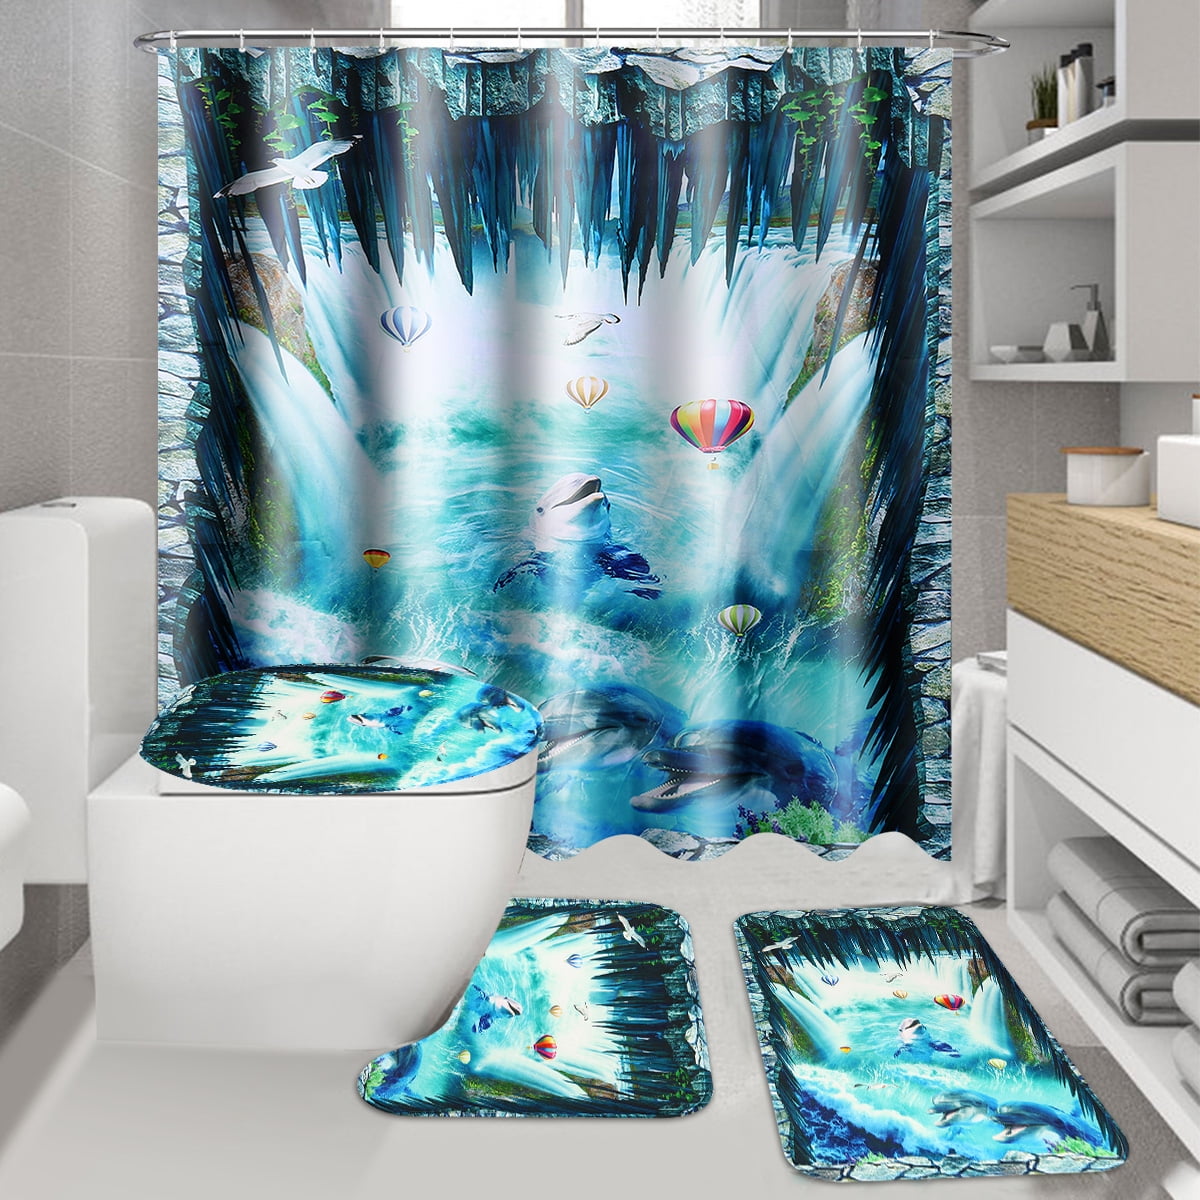 Shower Curtain Decor Set Elephant Love Flowers Design Bathroom Curtains 12 hooks 